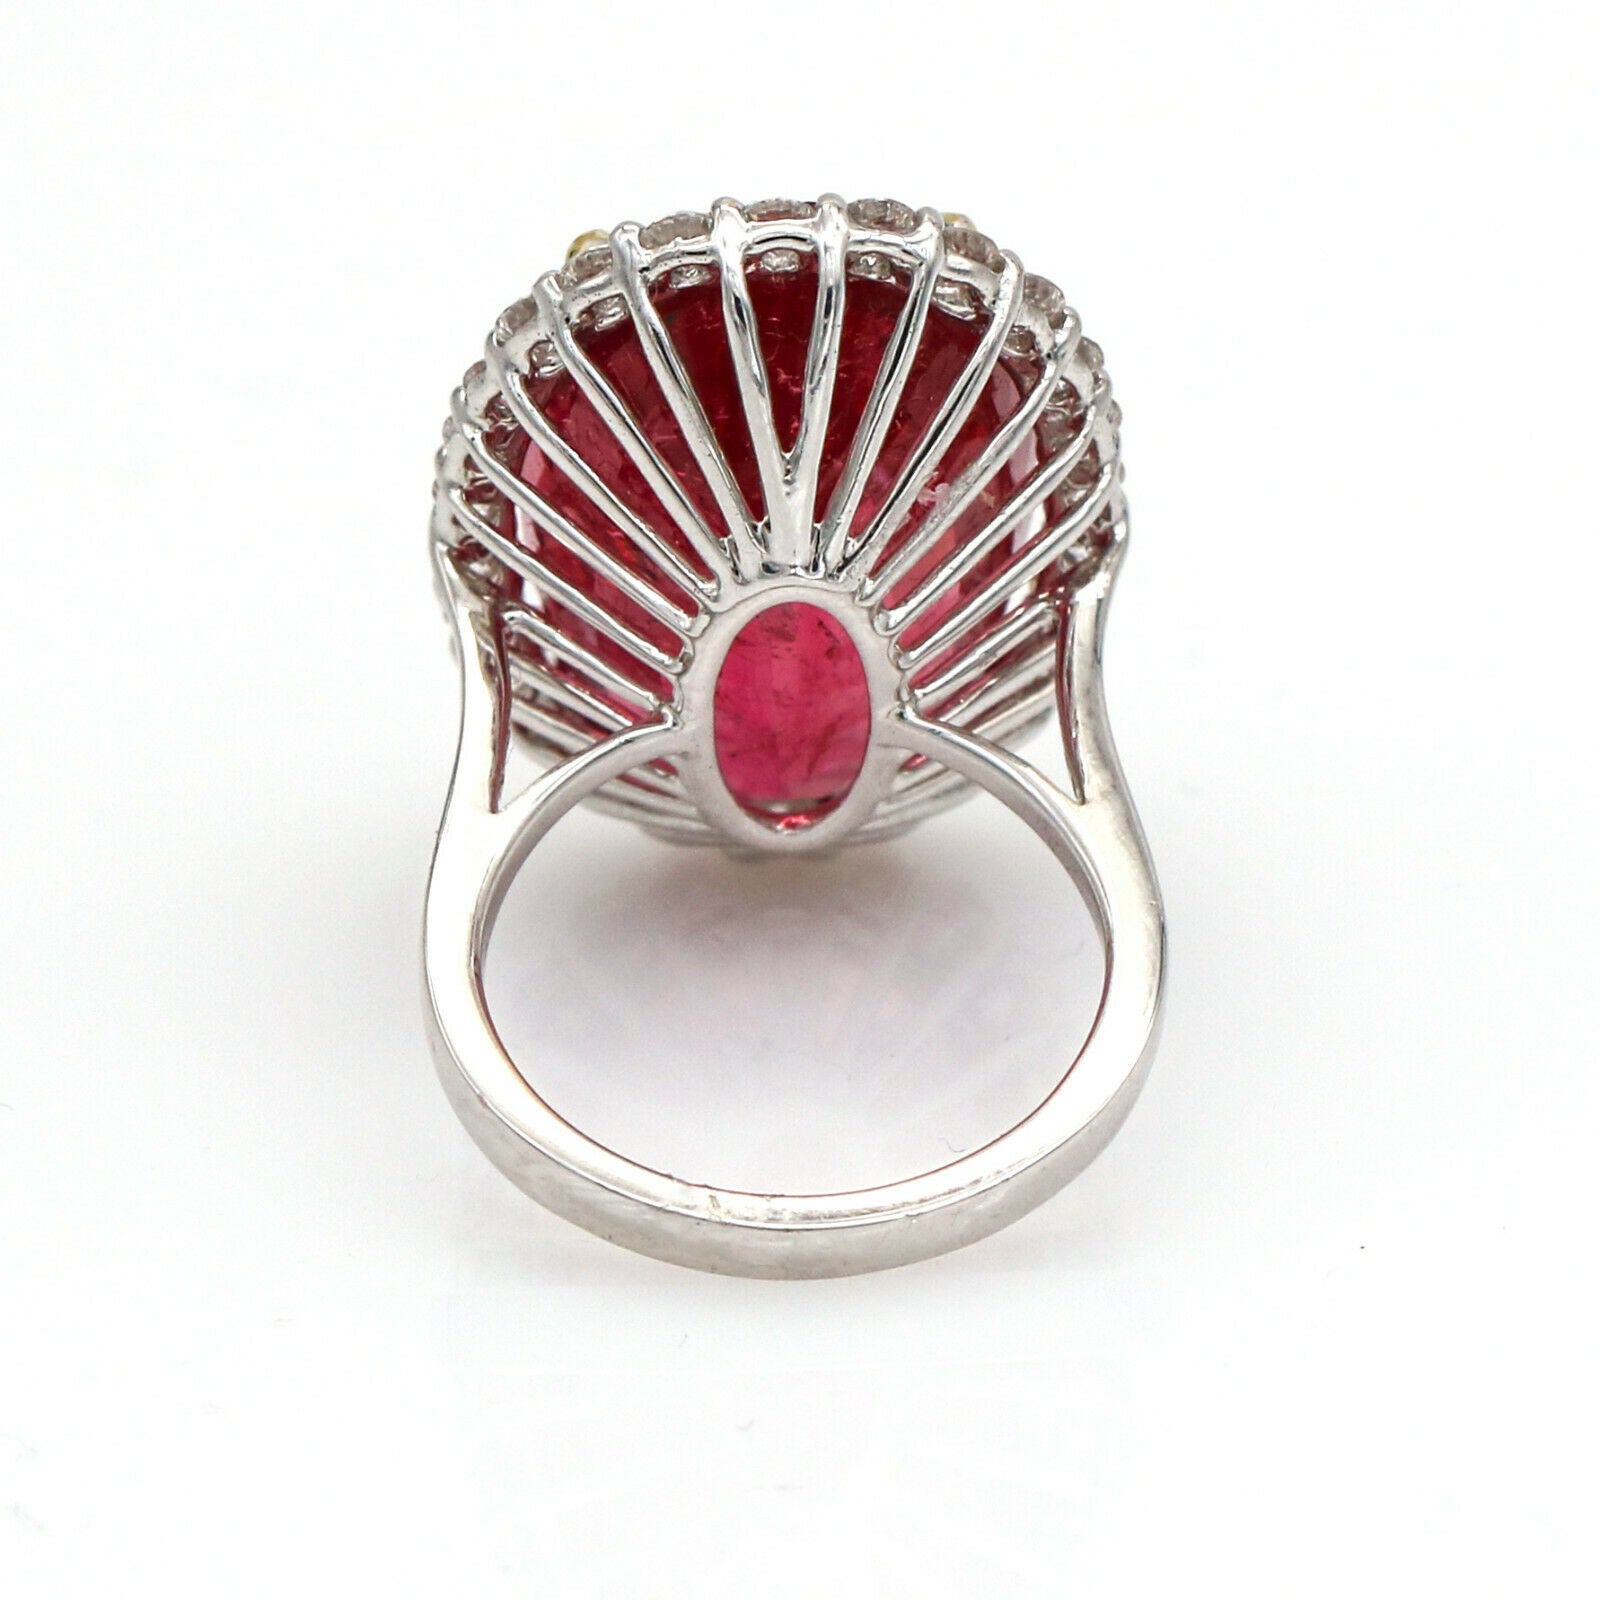 24.82 Ct Oval Pink Tourmaline Diamond Halo Statement Ring in 18k White Gold